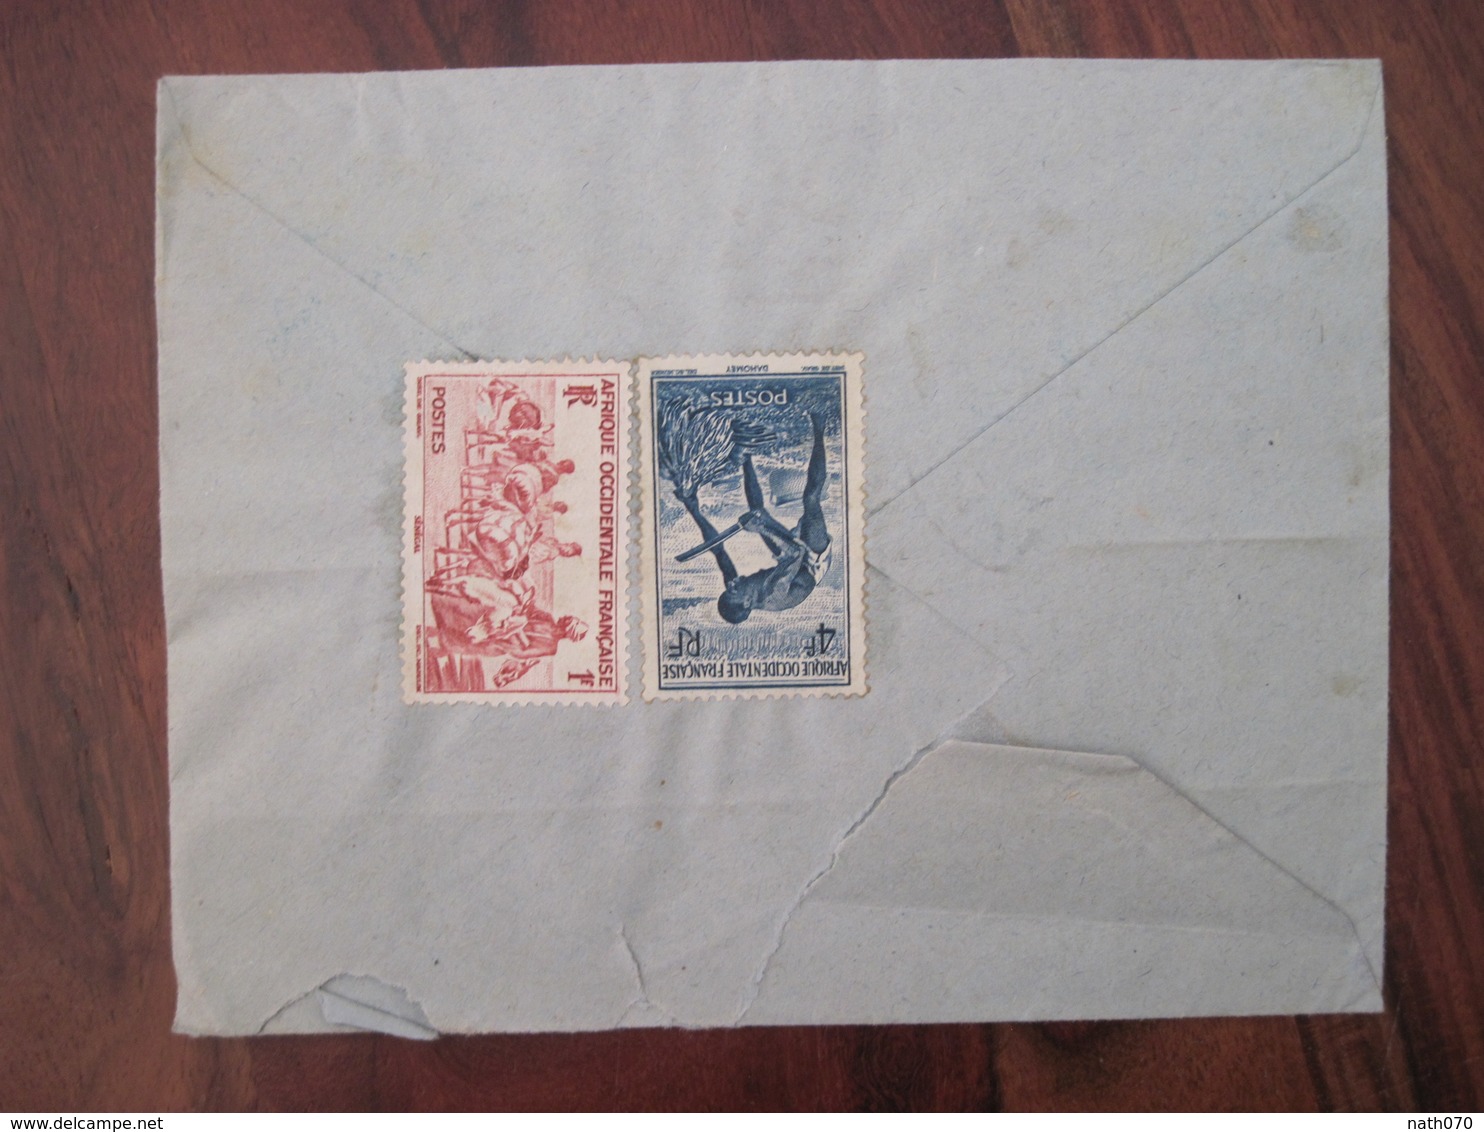 Cote D'Ivoire 1952 France TABOU AOF Timbre Lettre Enveloppe Cover Colonie Elfenbeinküste Ivoiry Coast - Storia Postale